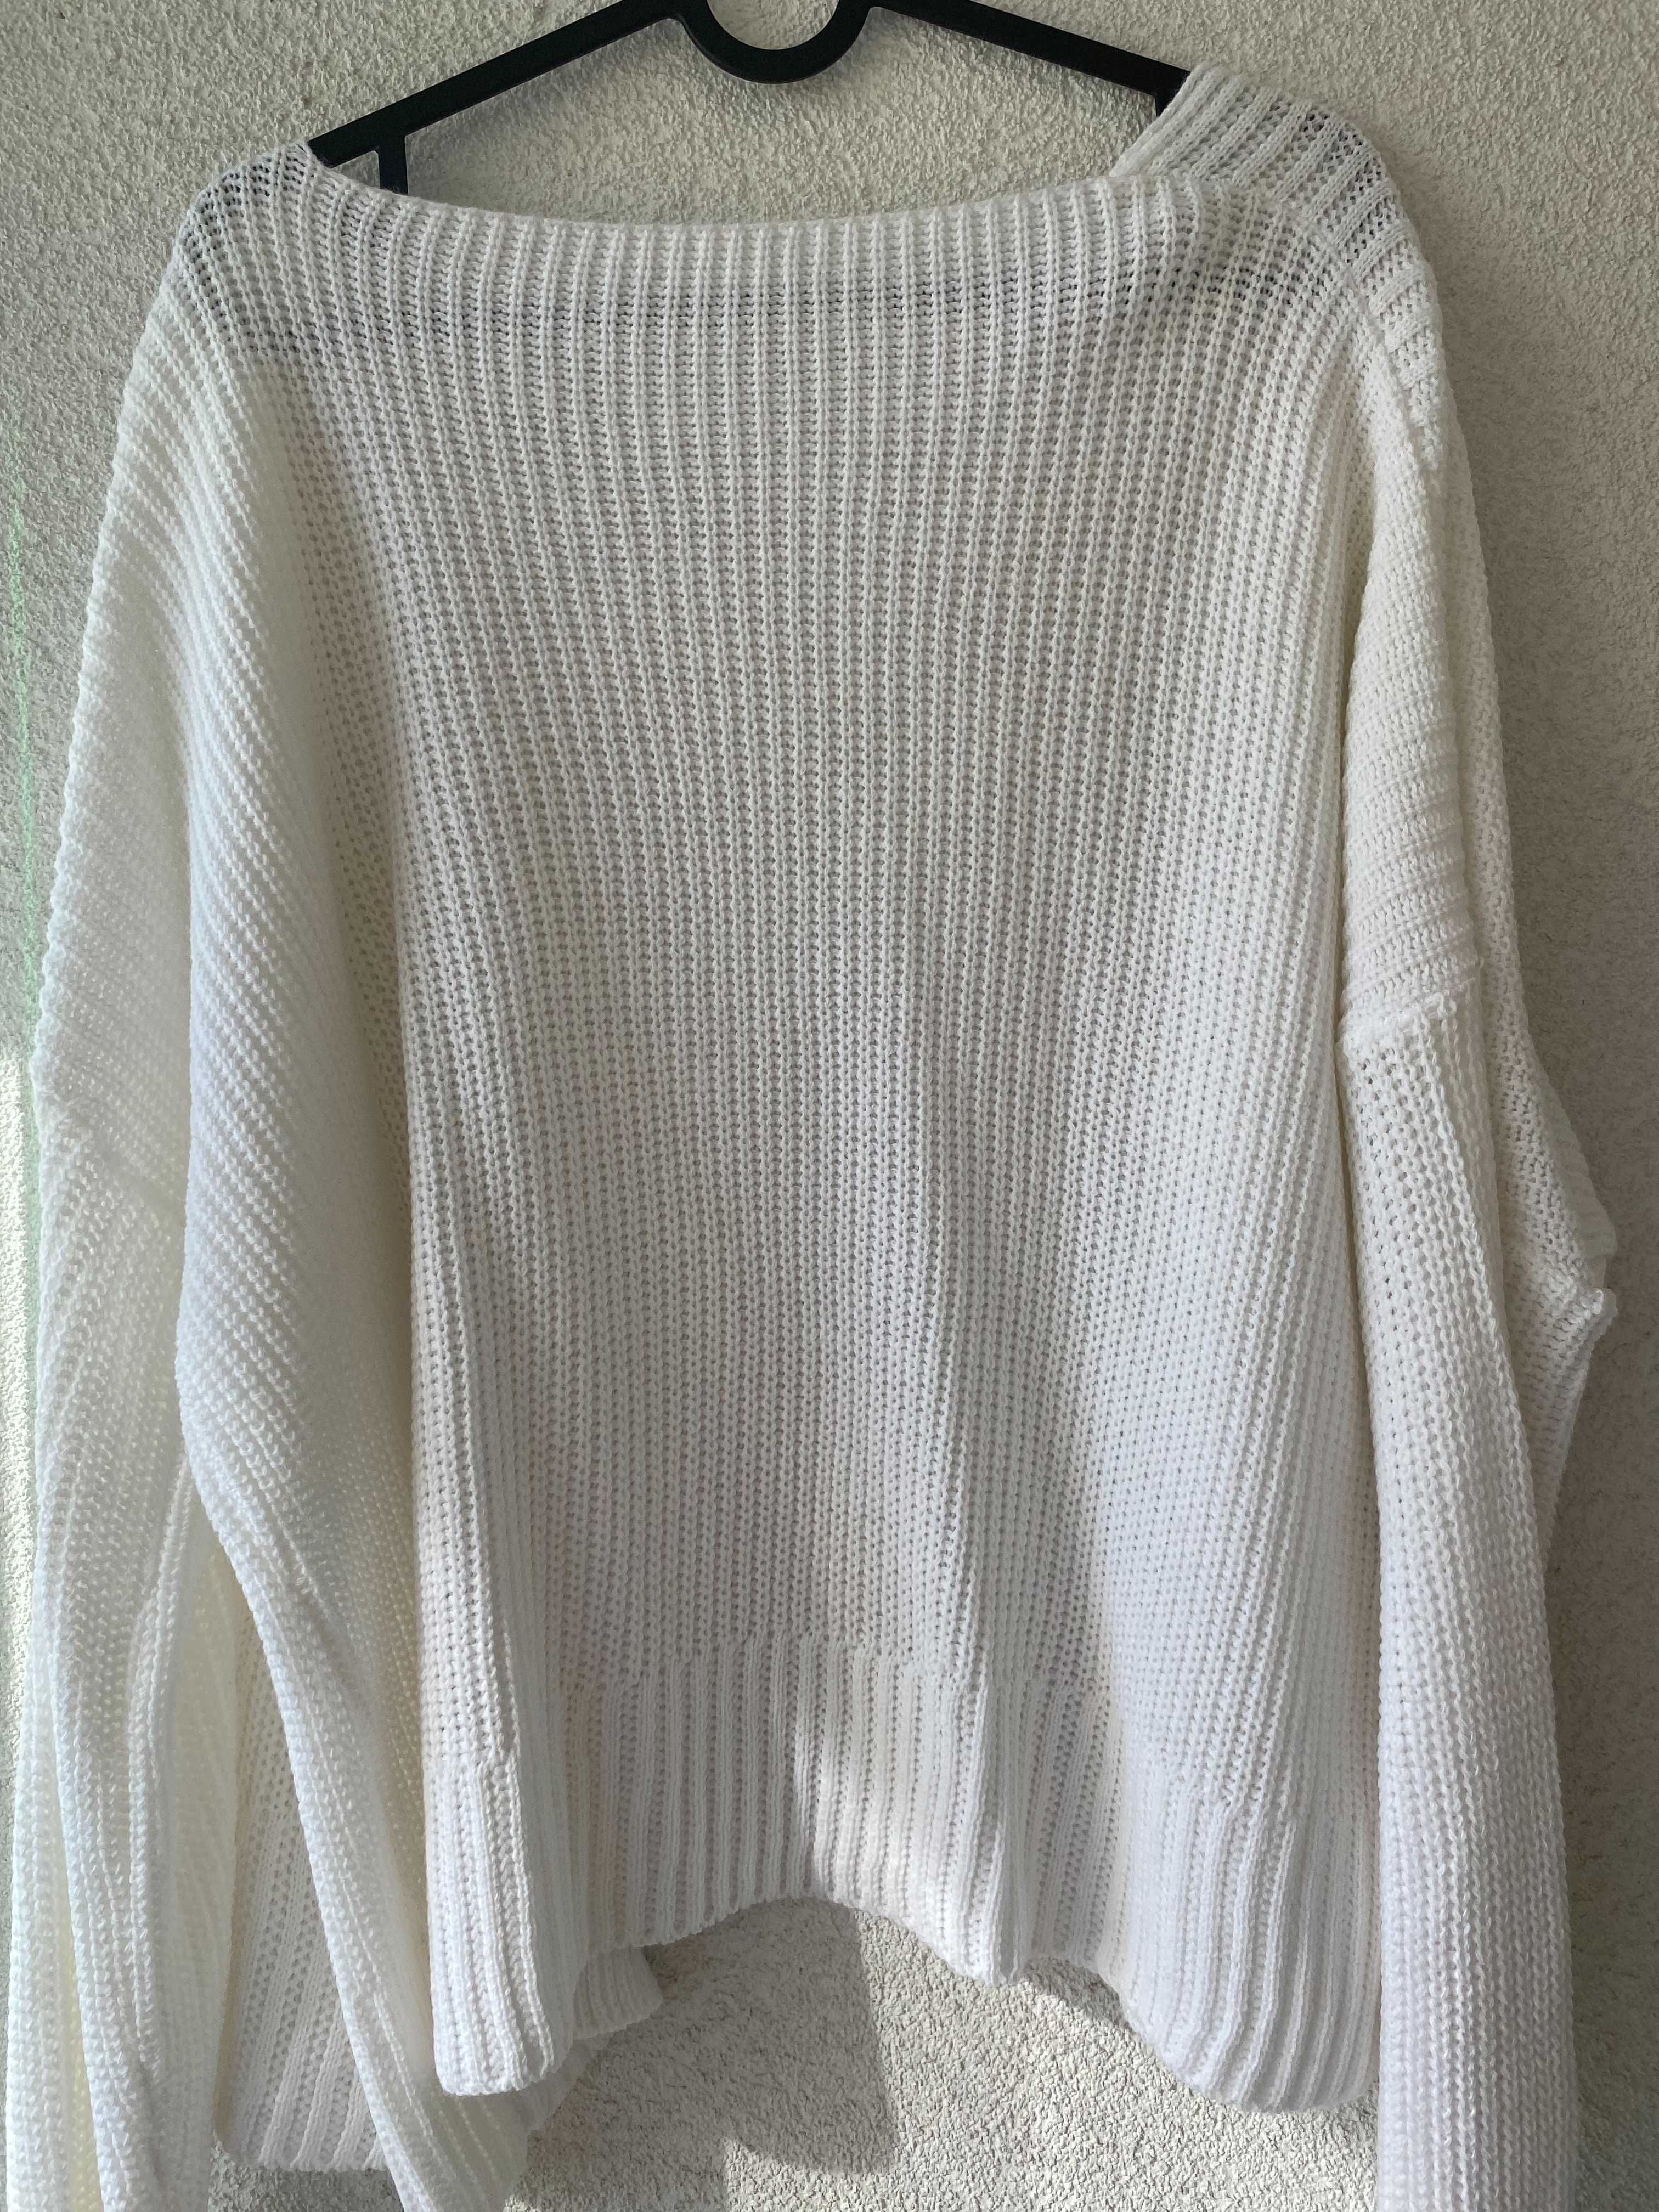 Cardigan/pulover alb, 'Reserved', de primavara, nou, marime M/L